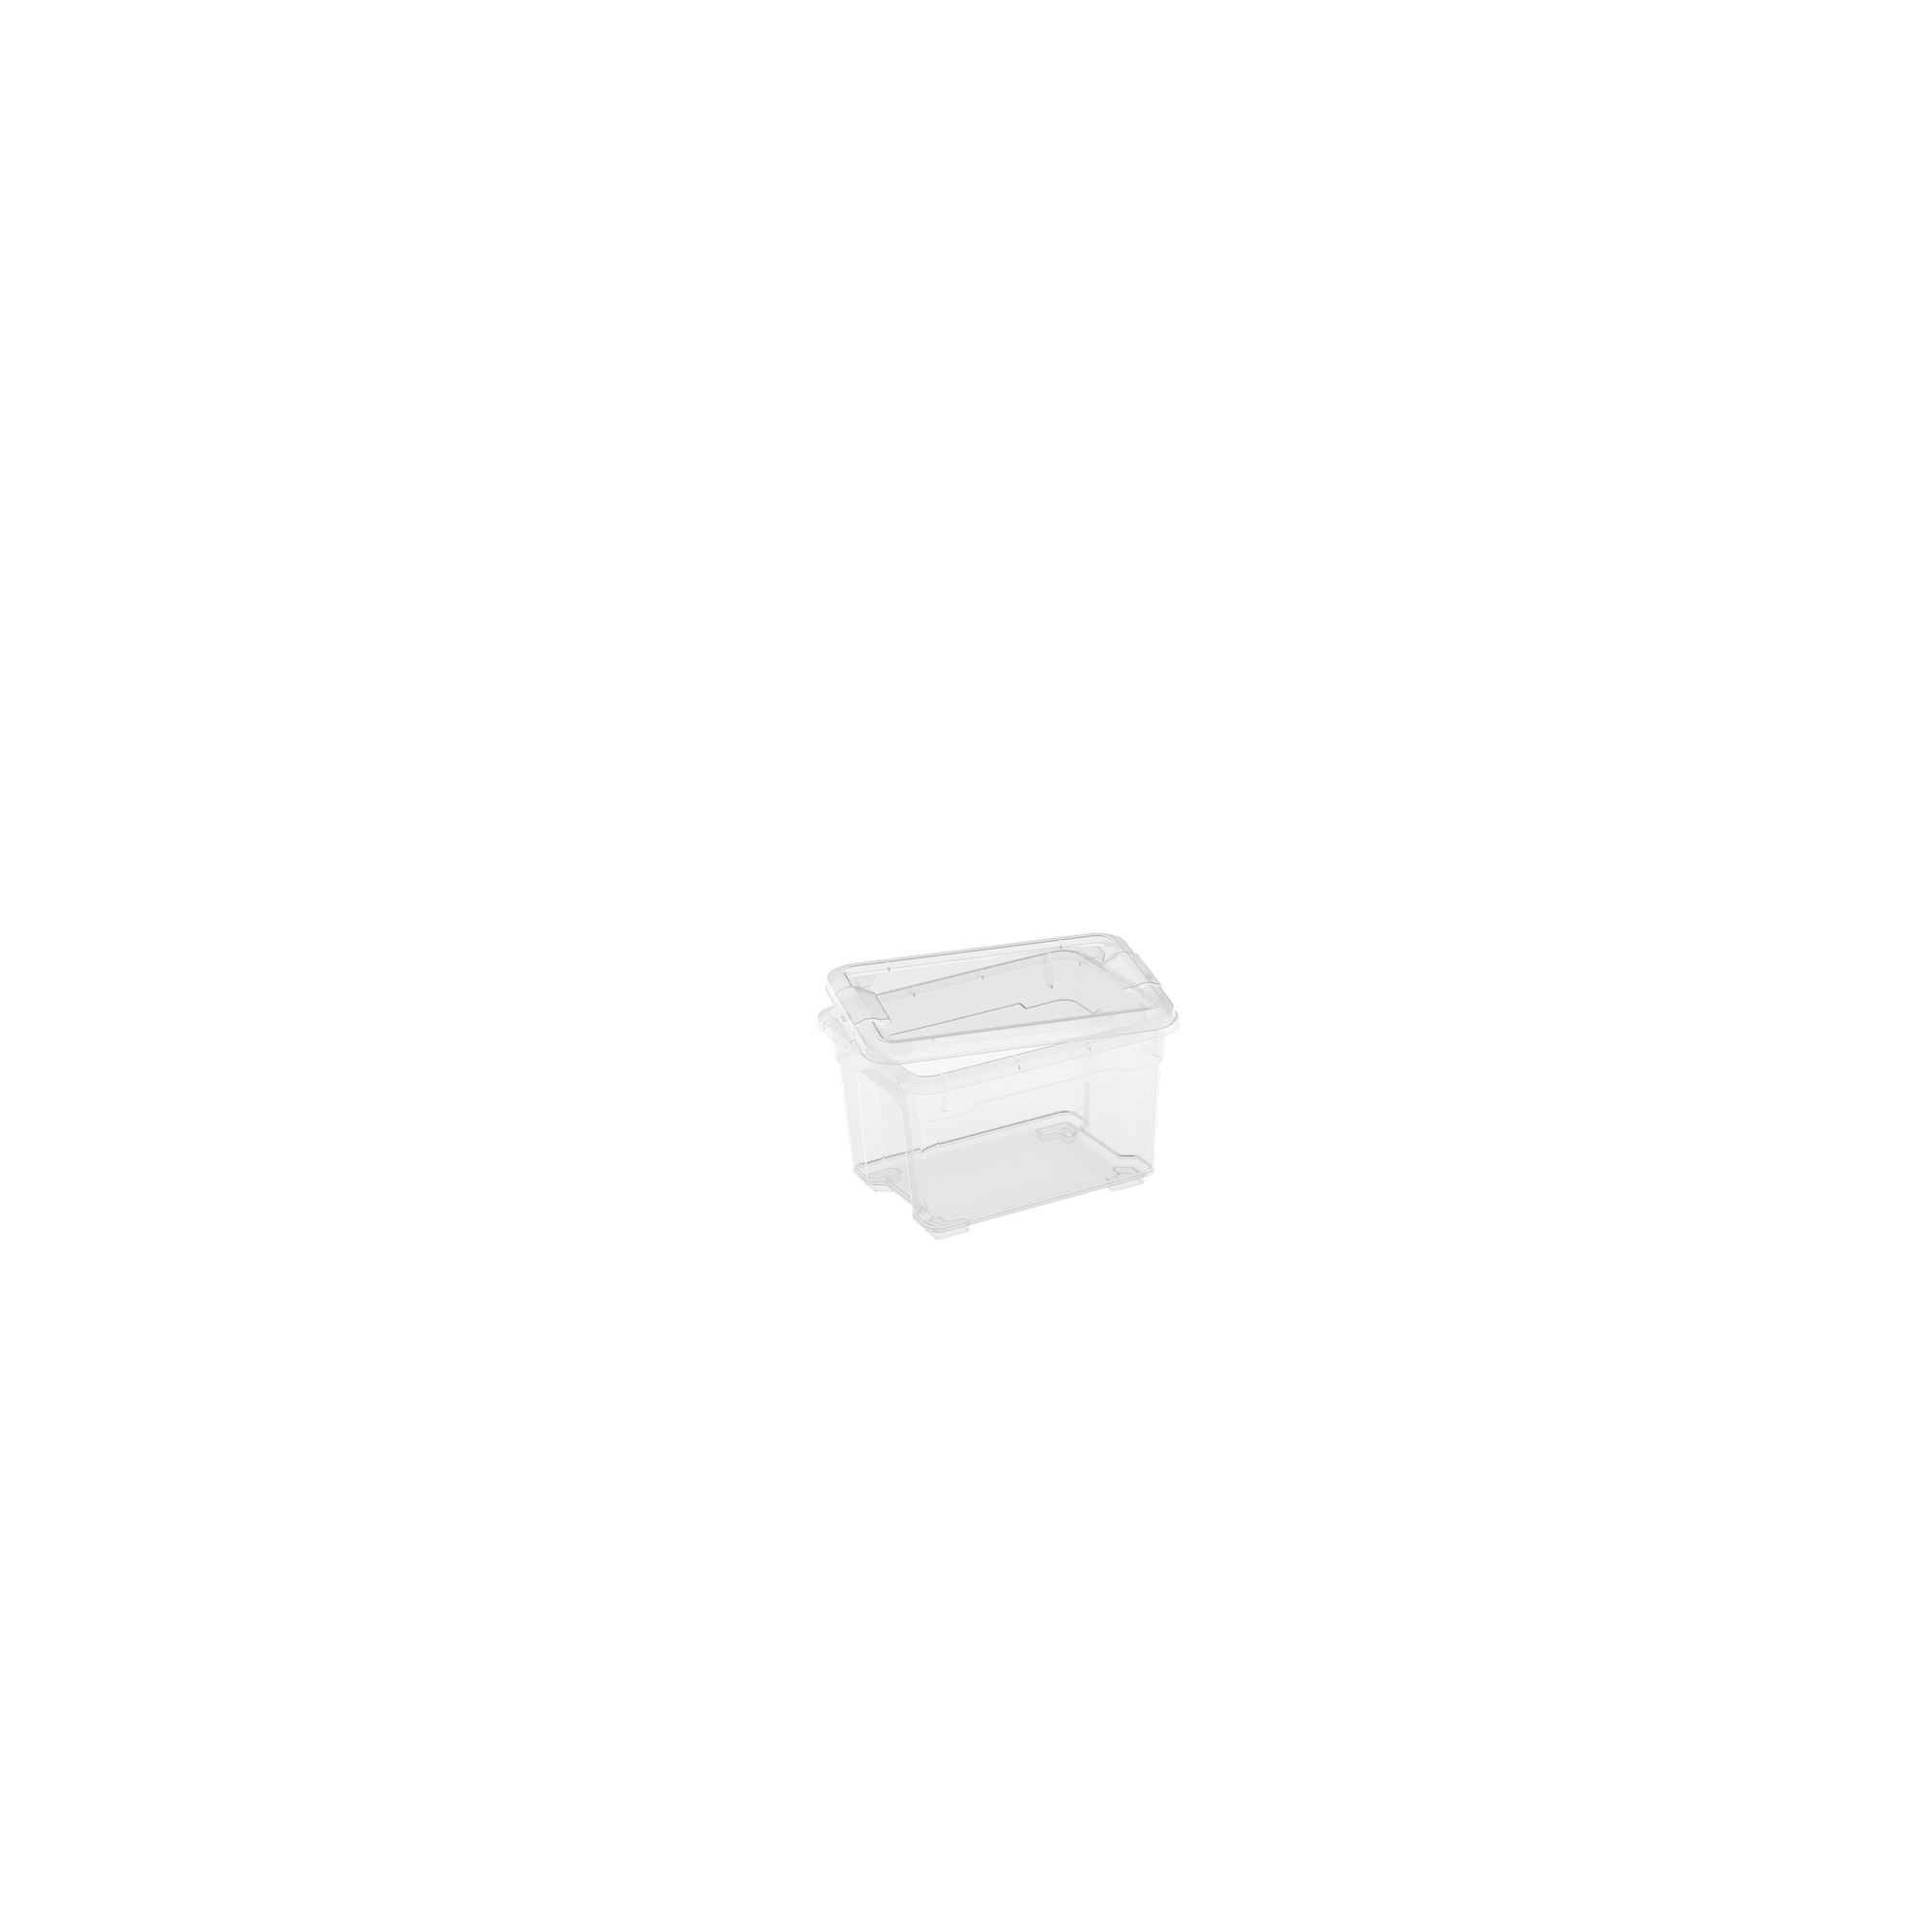 Aufbewahrung 'R Box Mini' transparent 17,8 x 13,1 x 10,7 cm, inklusive Deckel + product picture